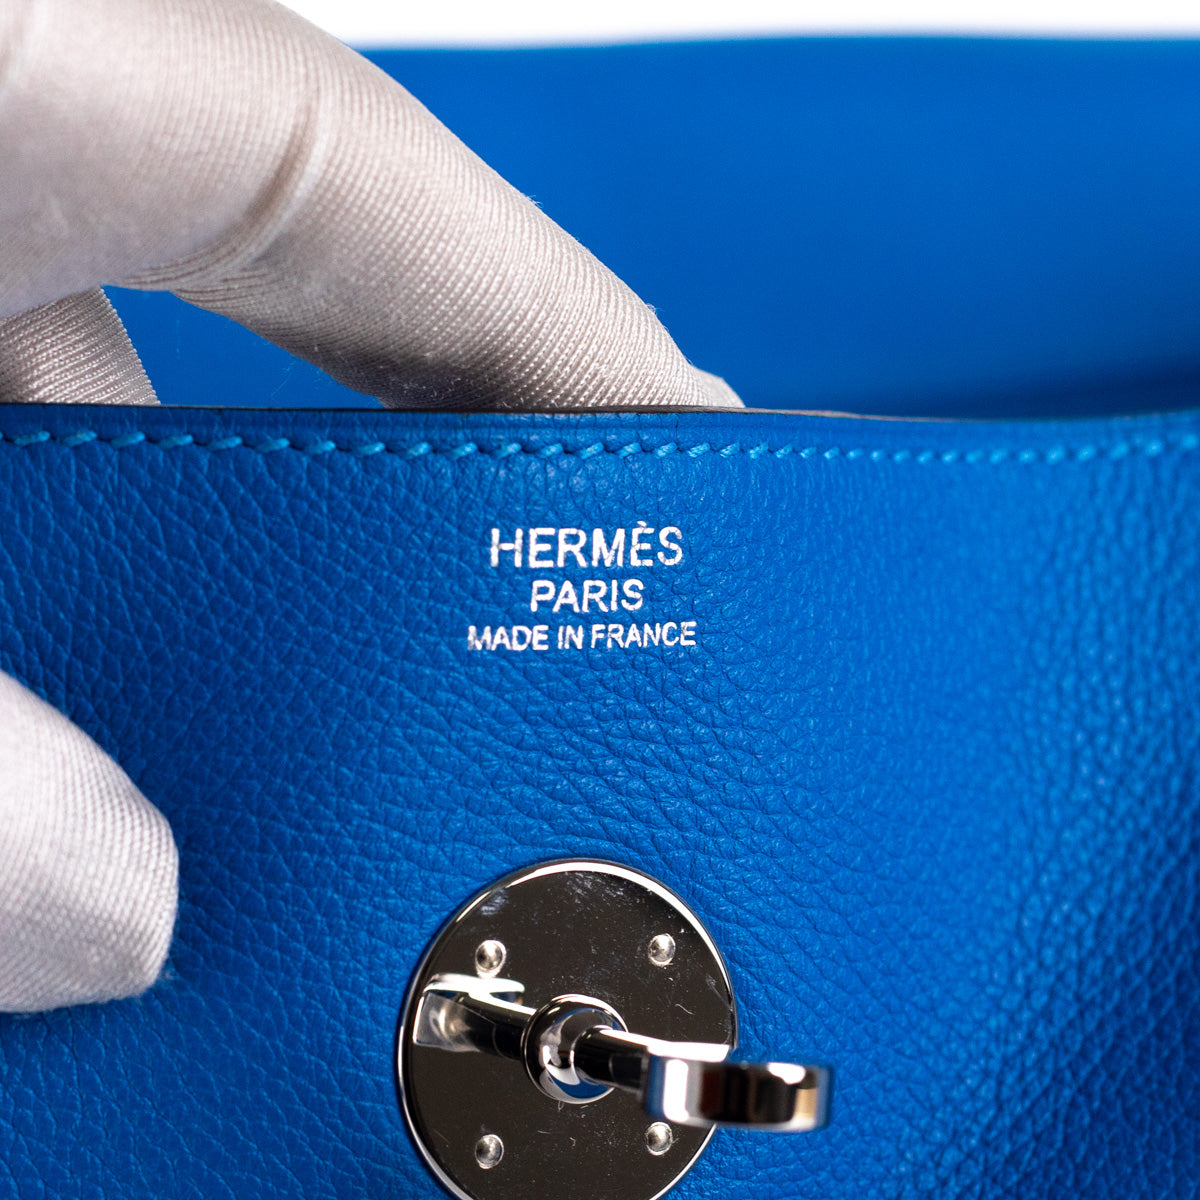 Hermès Lindy 30 Blue - X Stamp - THE PURSE AFFAIR